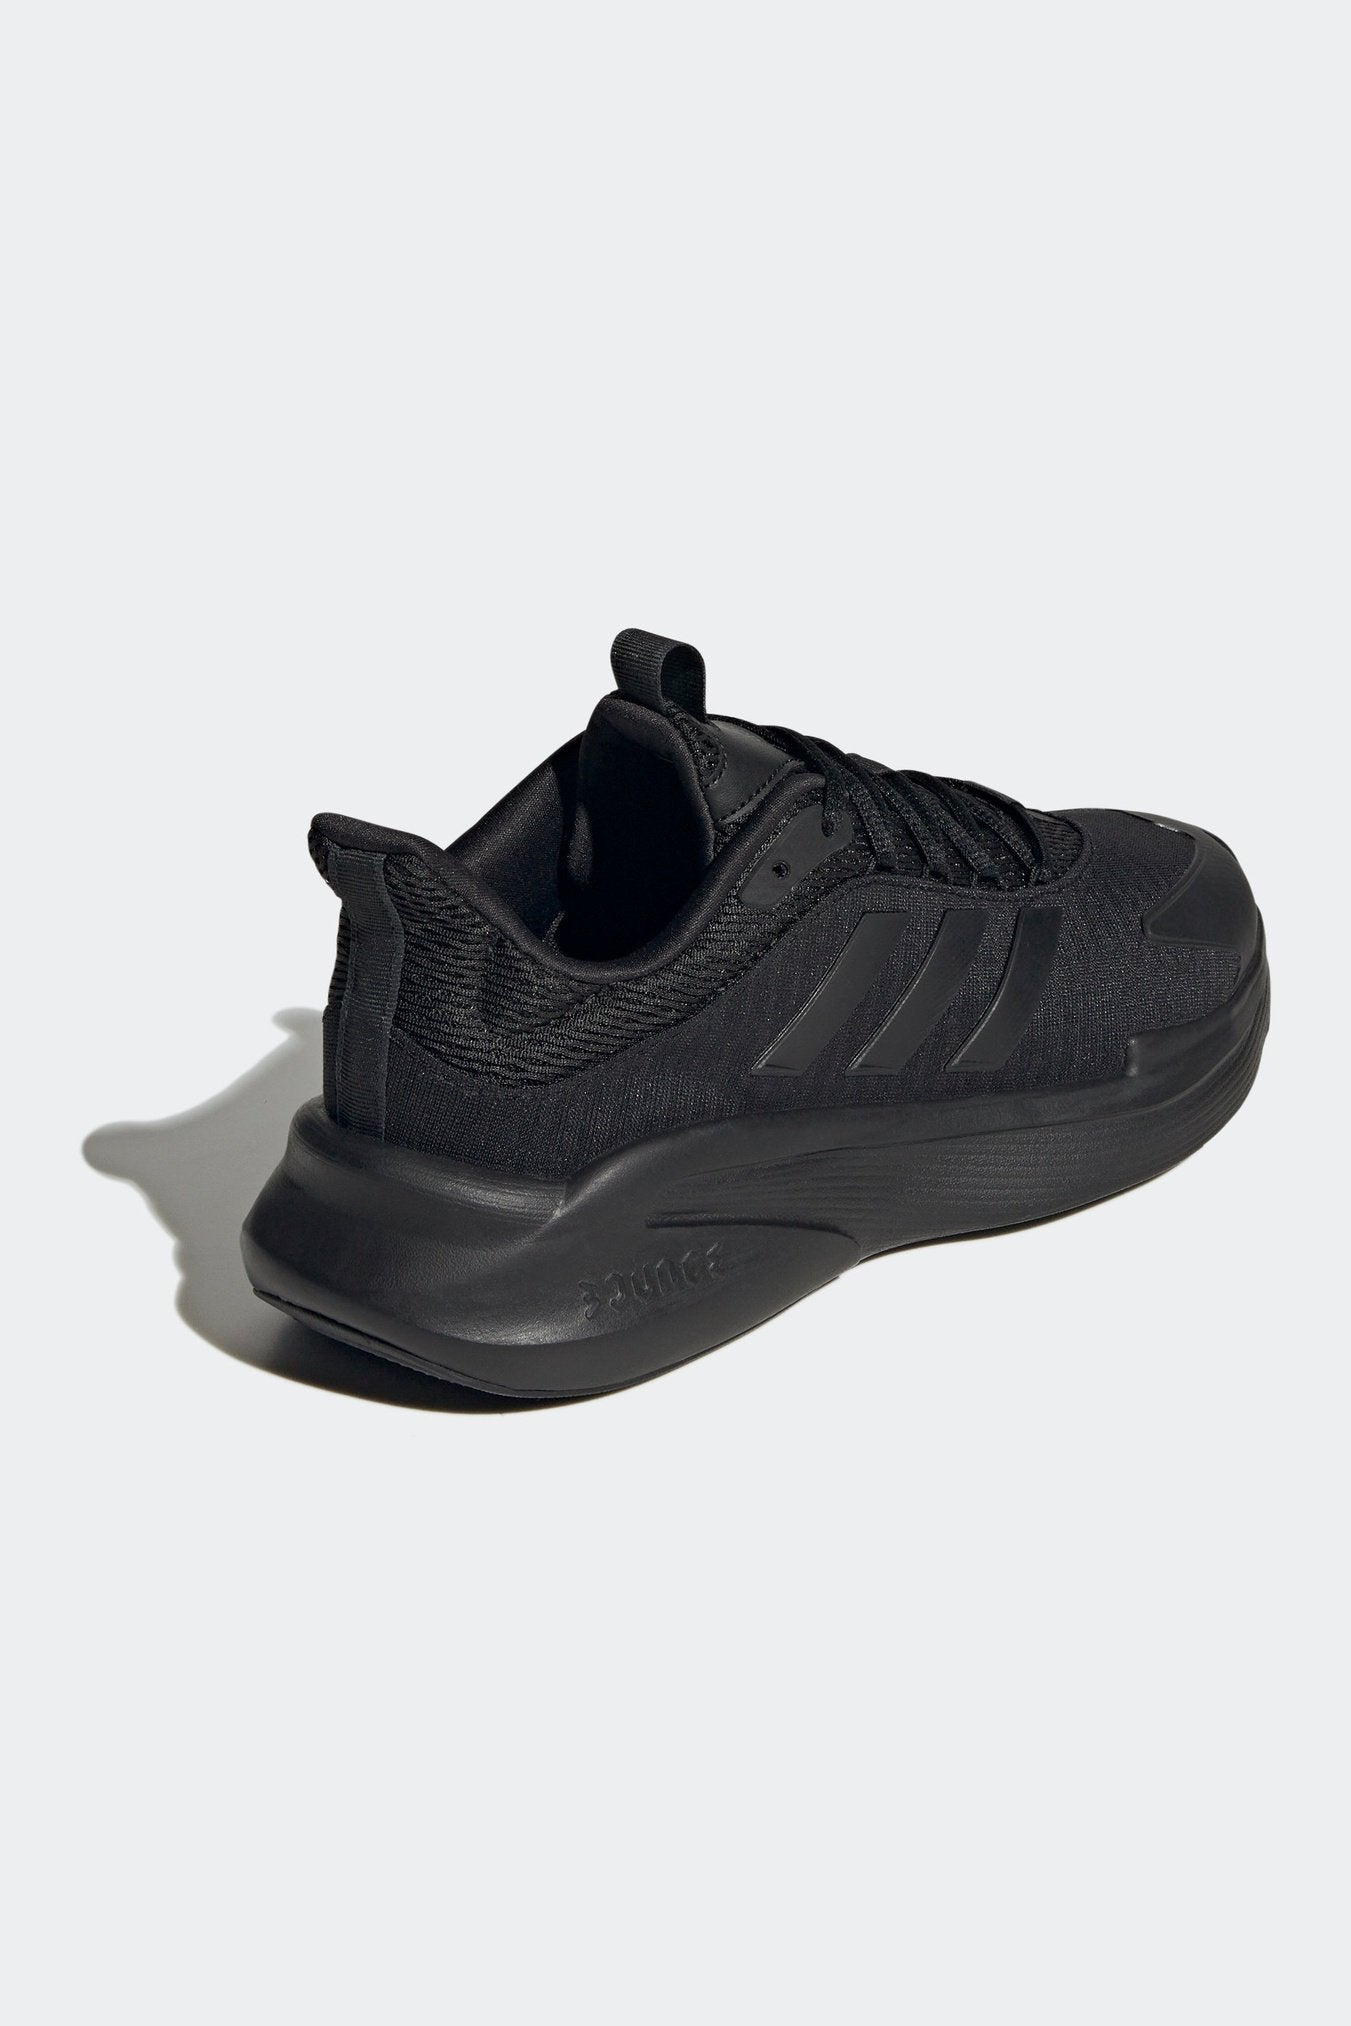 ADIDAS - נעלי ריצה לגברים ALPHA EDGE+בצבע שחור - MASHBIR//365